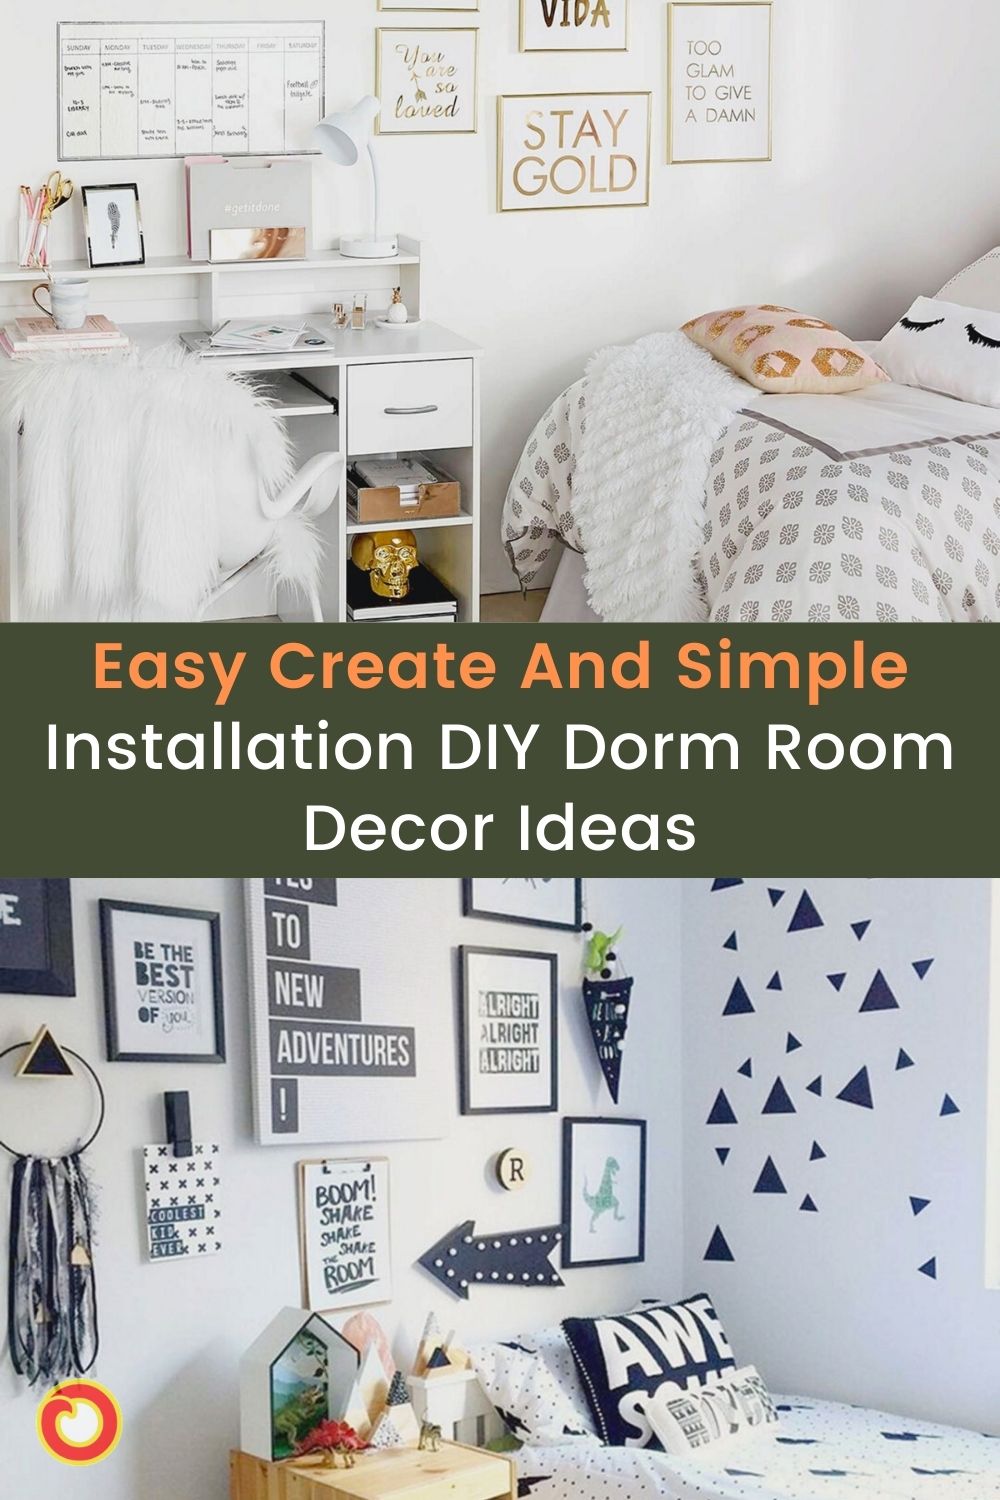 Easy Create And Simple Installation DIY Dorm Room Decor Ideas